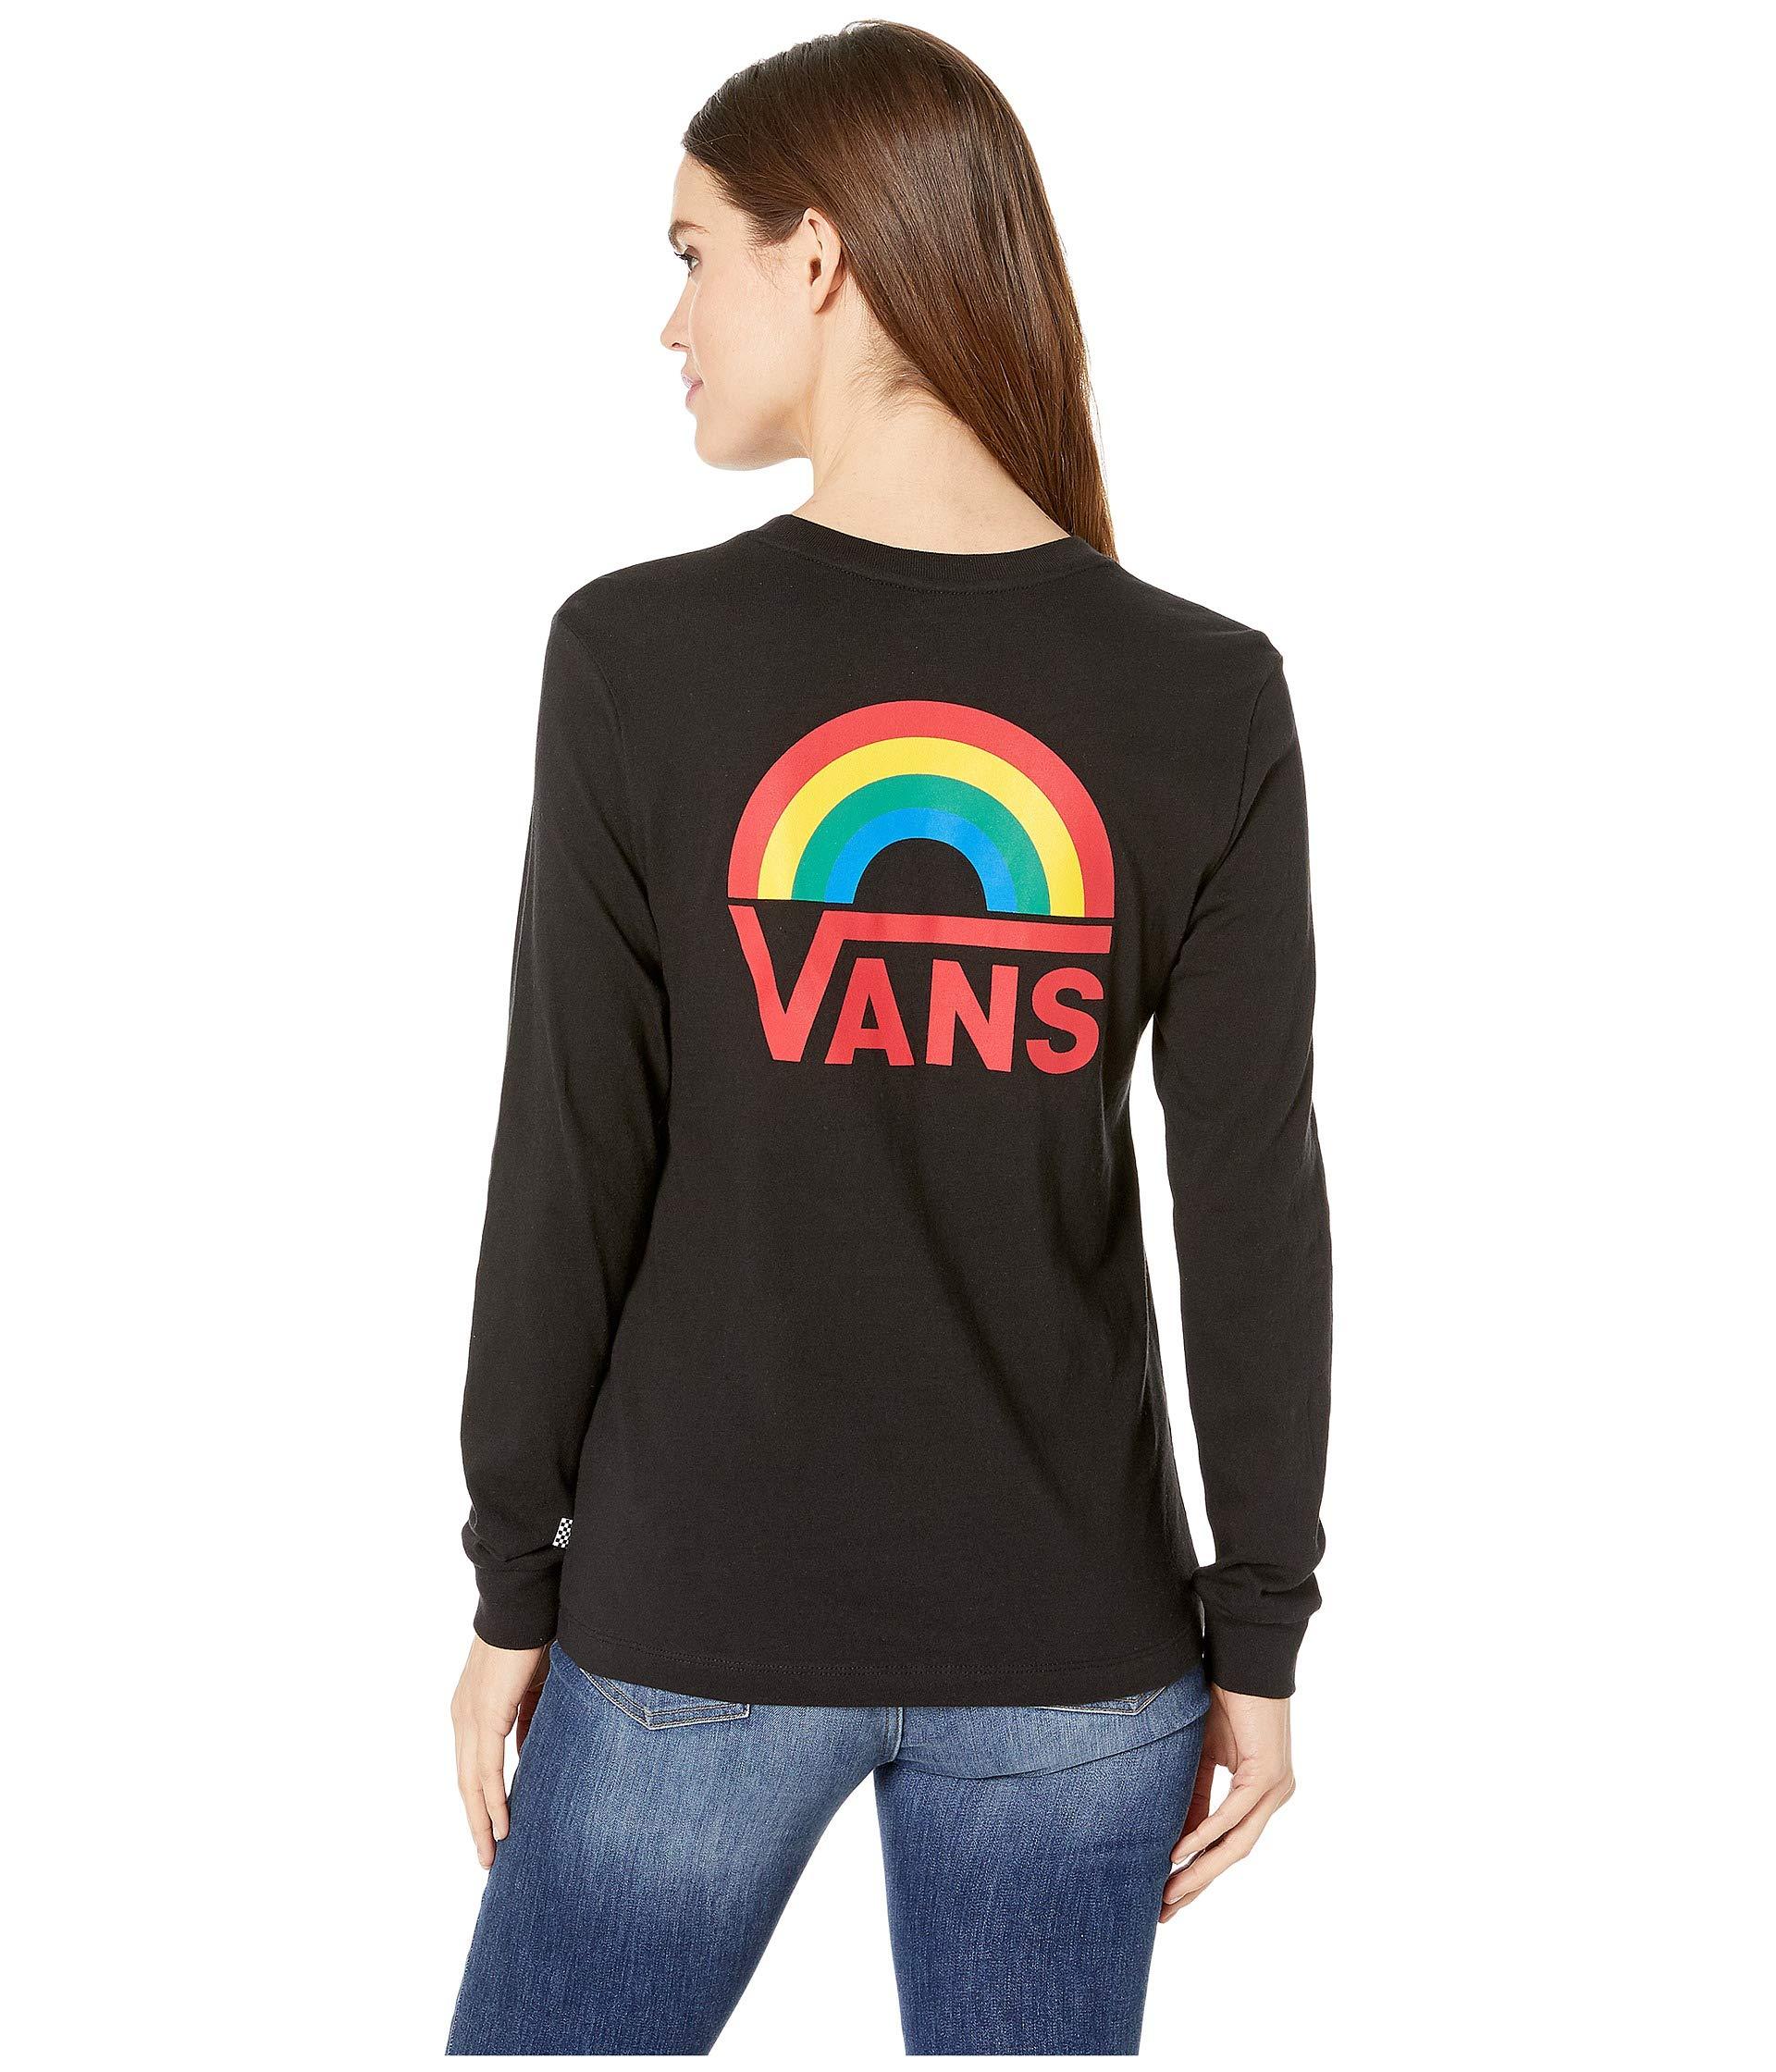 vans rainbow long sleeve